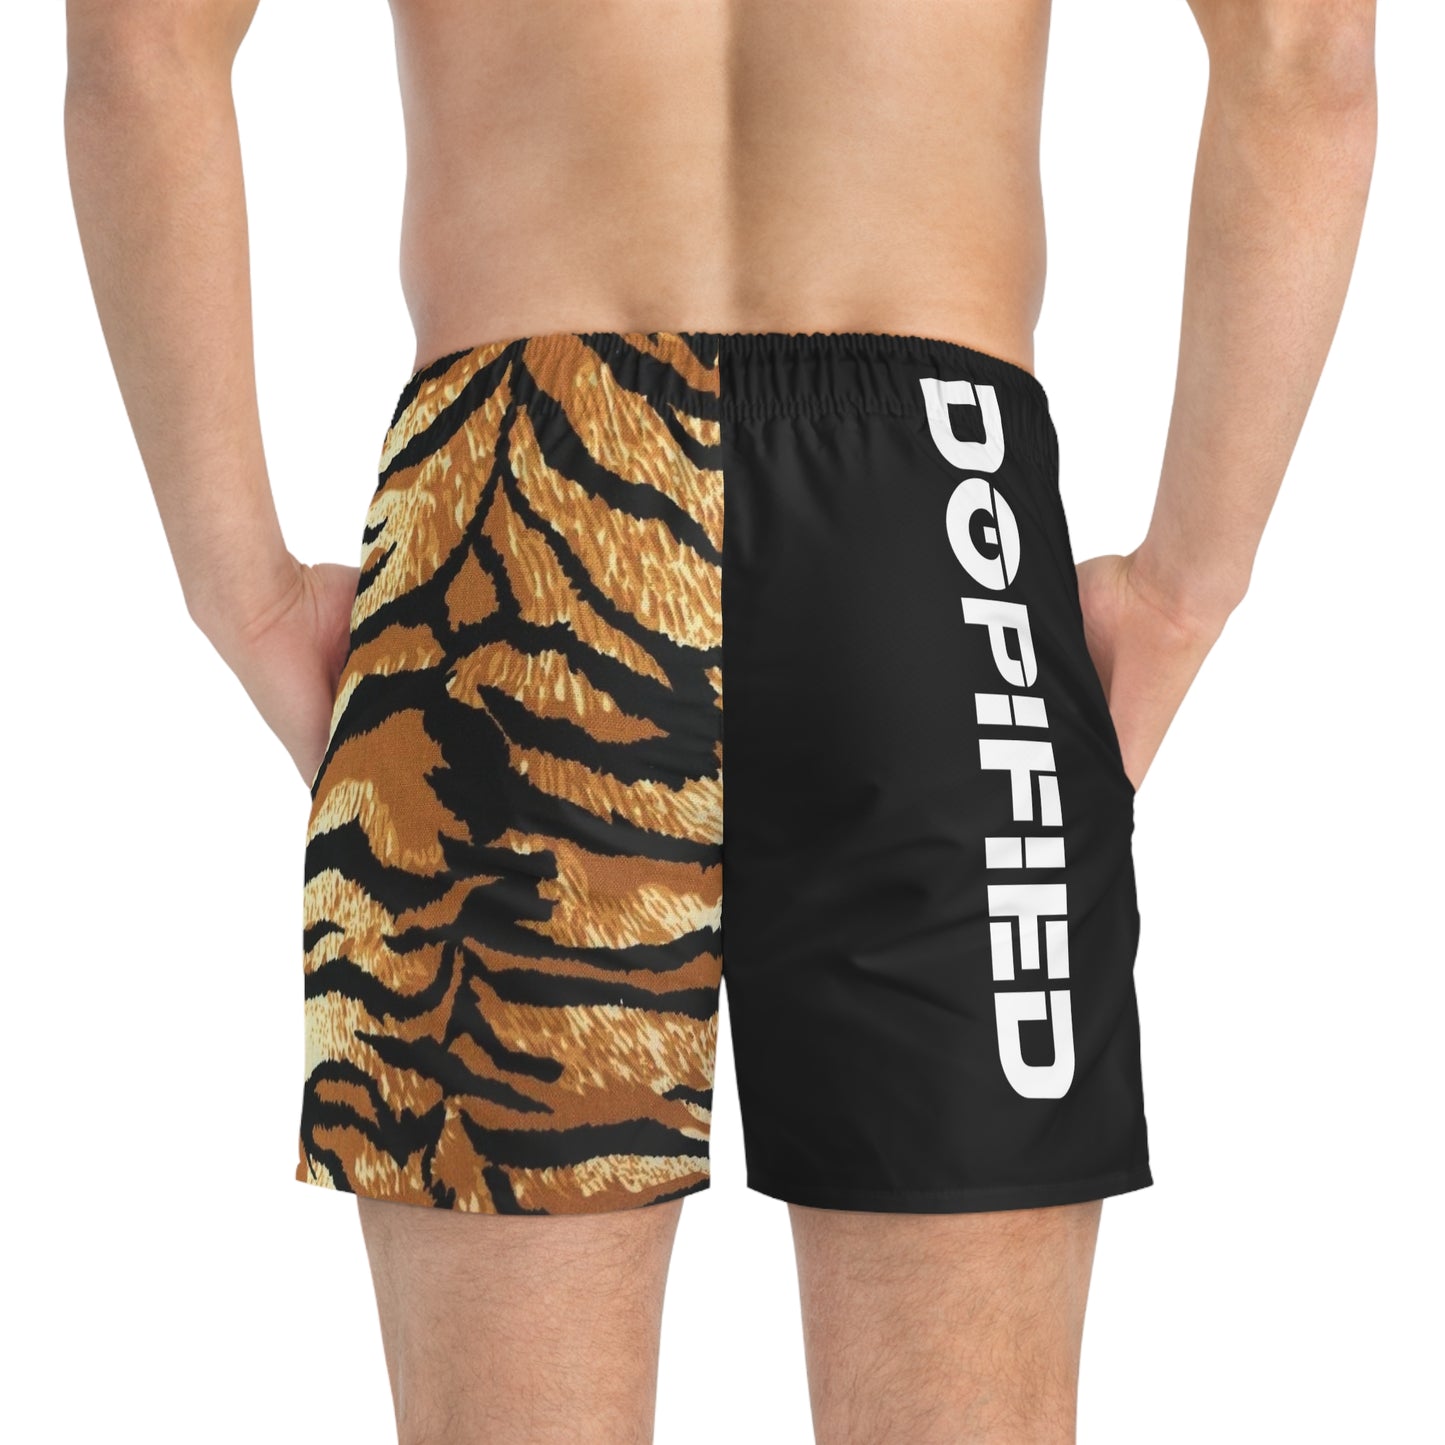 DOPiFiED “Tiger Mode” Swim Trunks